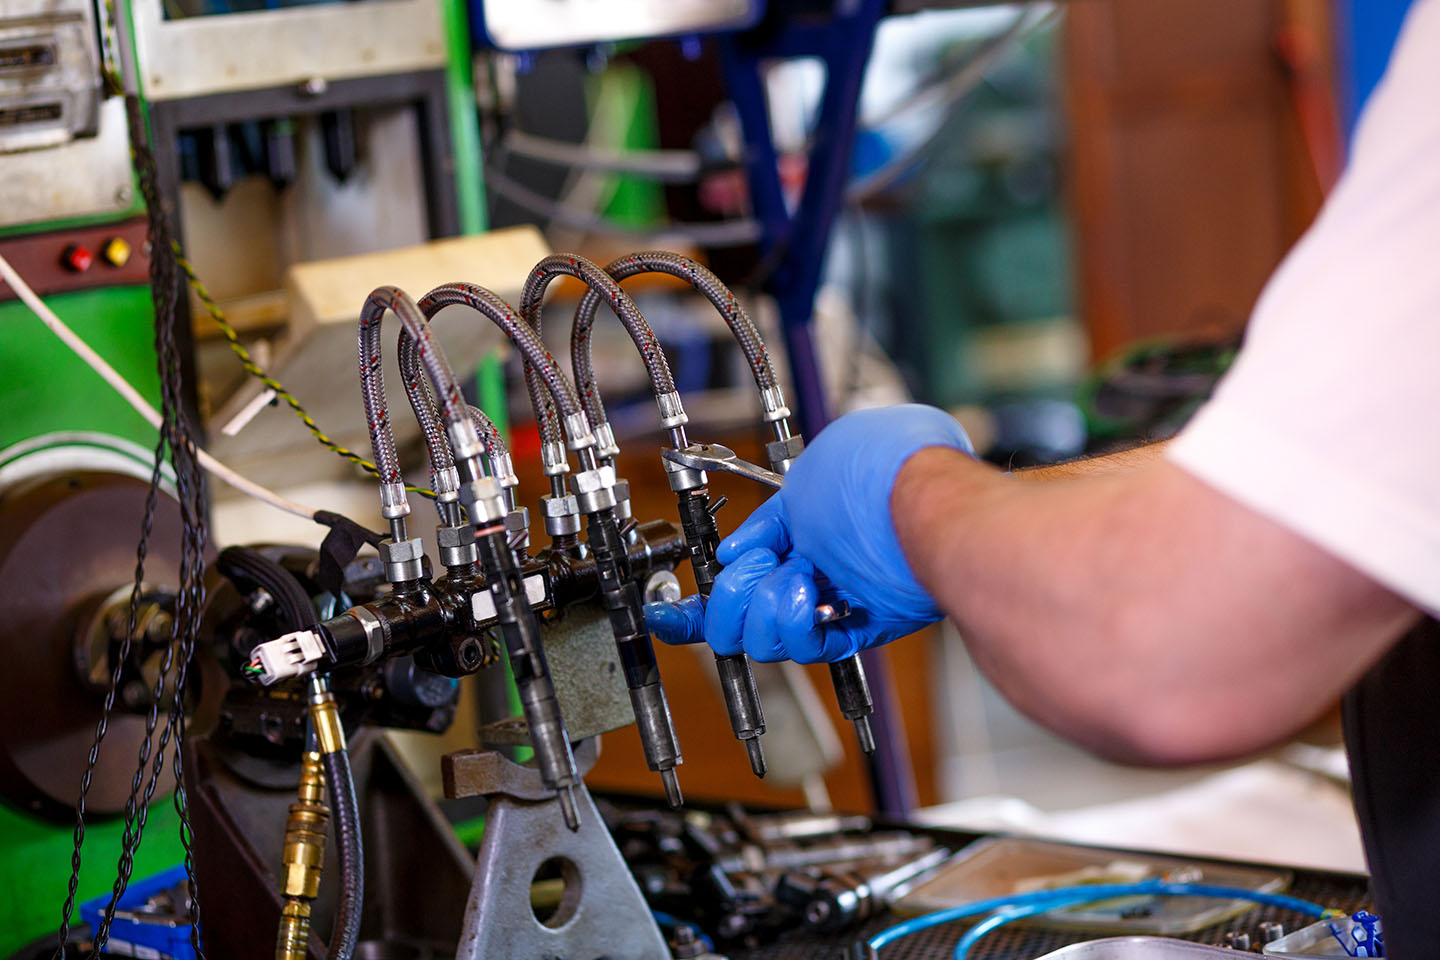 Professional mechanic testing diesel injector in his workshop.